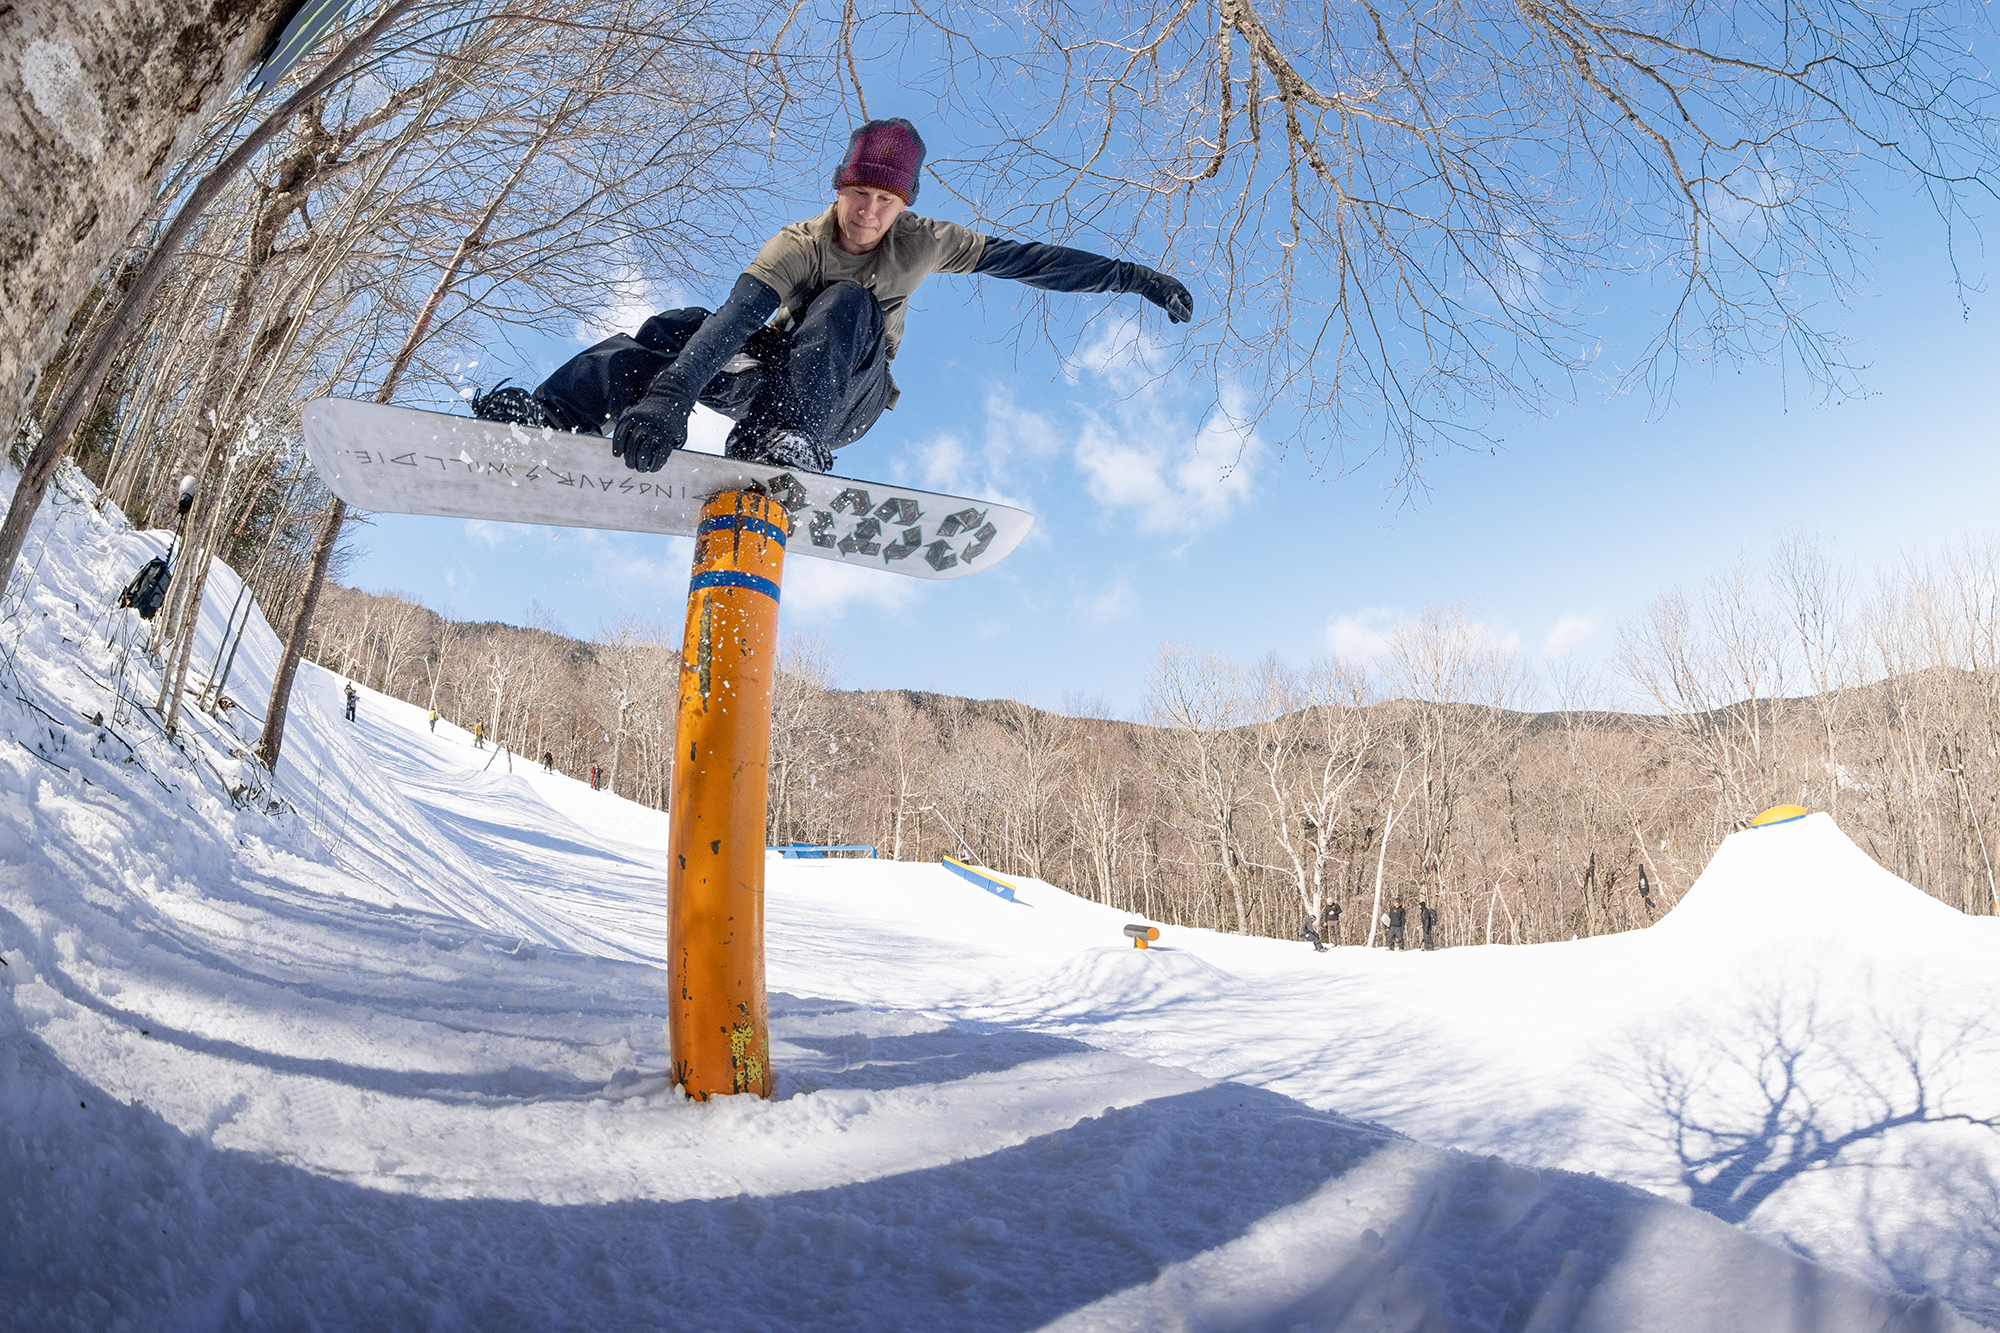 Ian Keay snowboarding